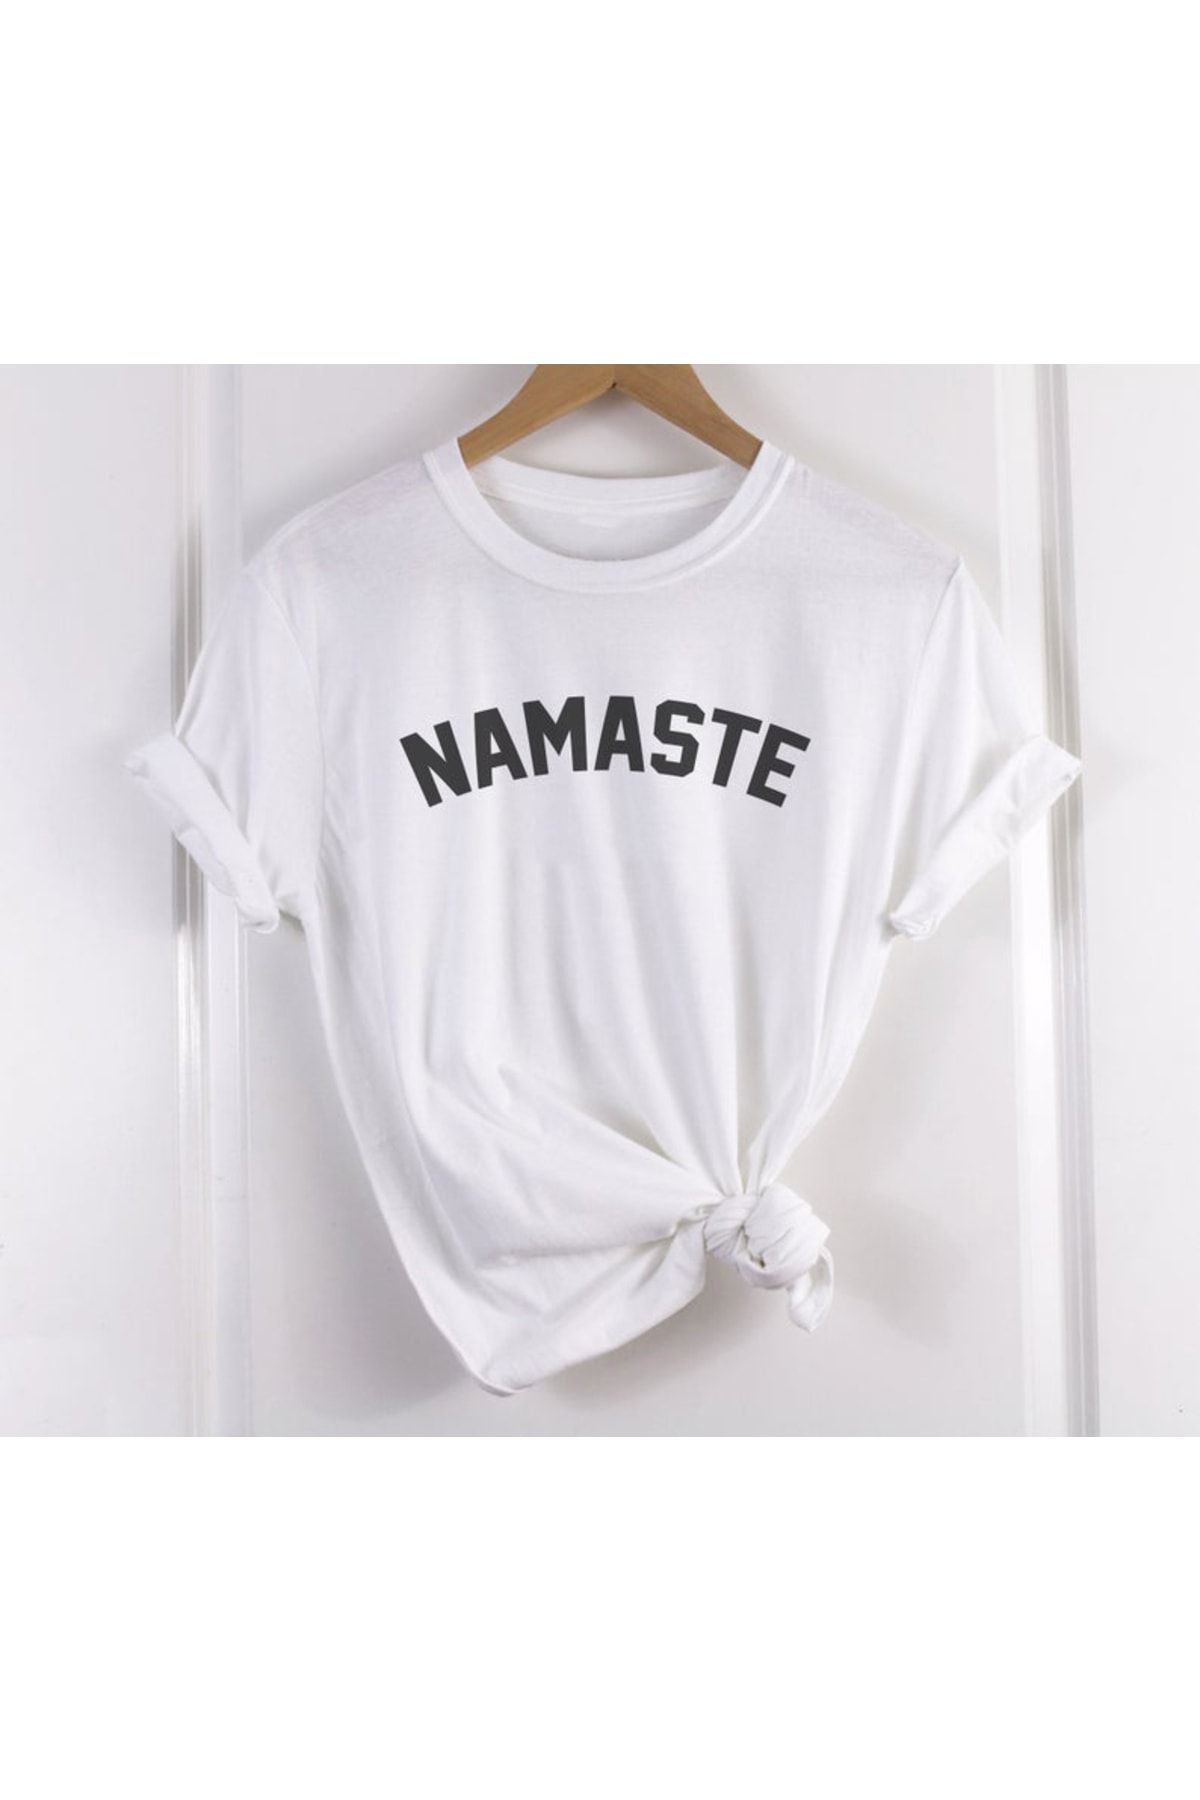 Hellomaandme Namaste Baskılı Yoga Sevenlere Özel Tshirt Modeli